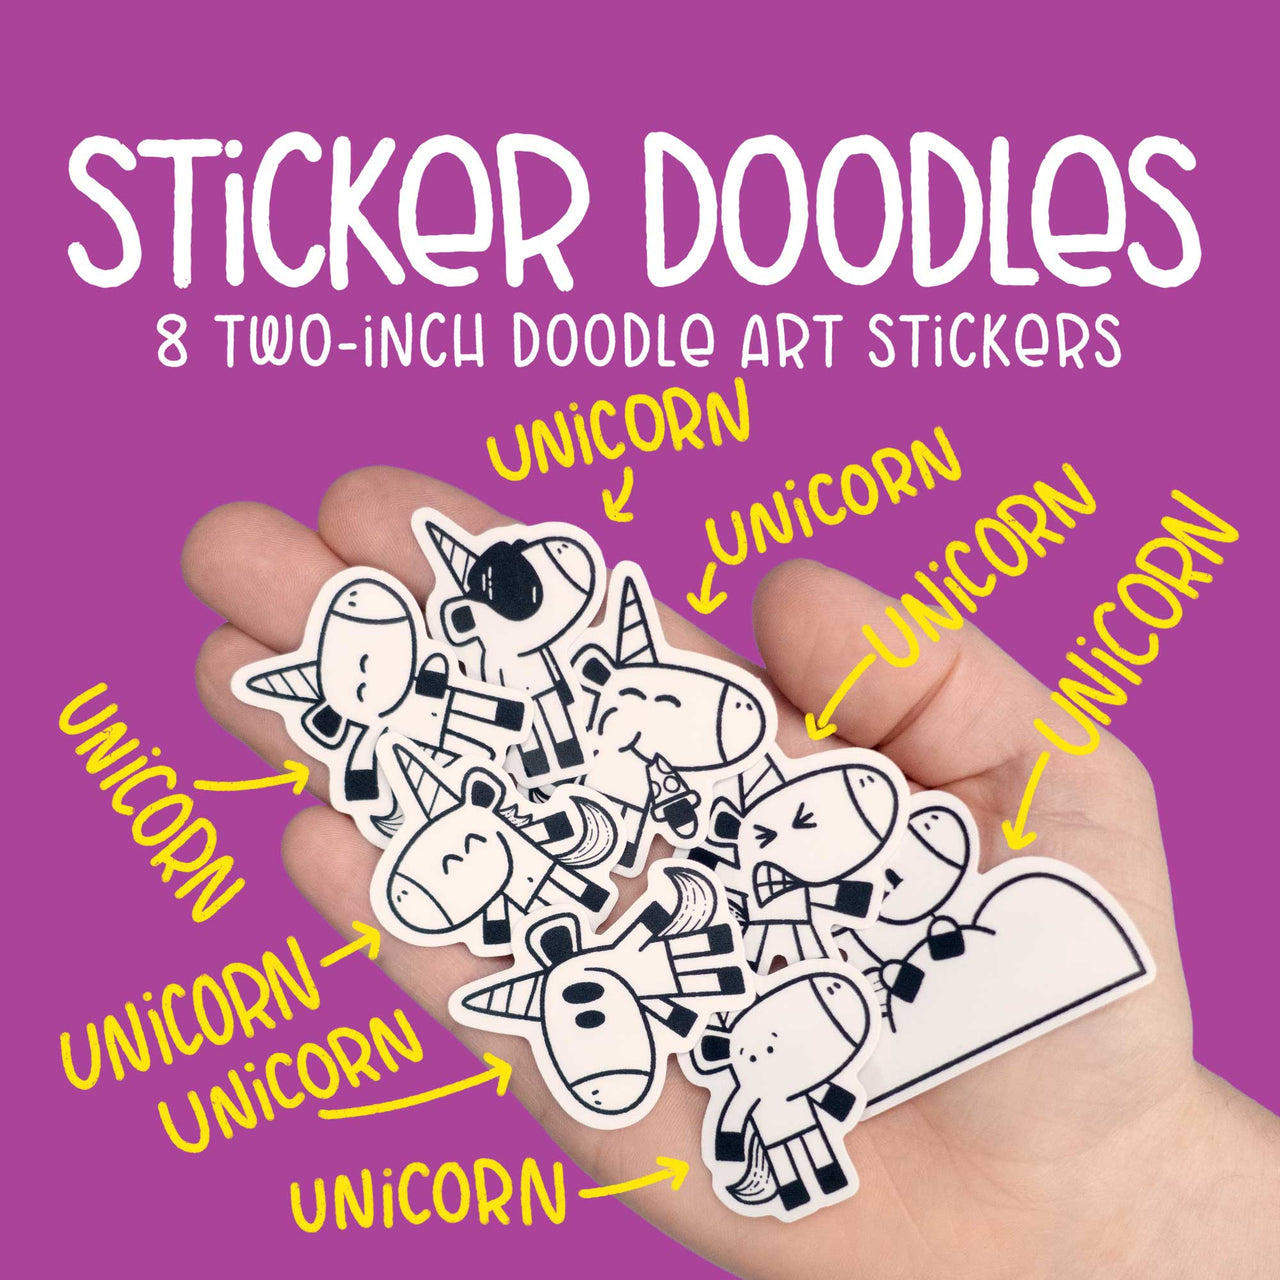 Unicorn Sticker Doodles